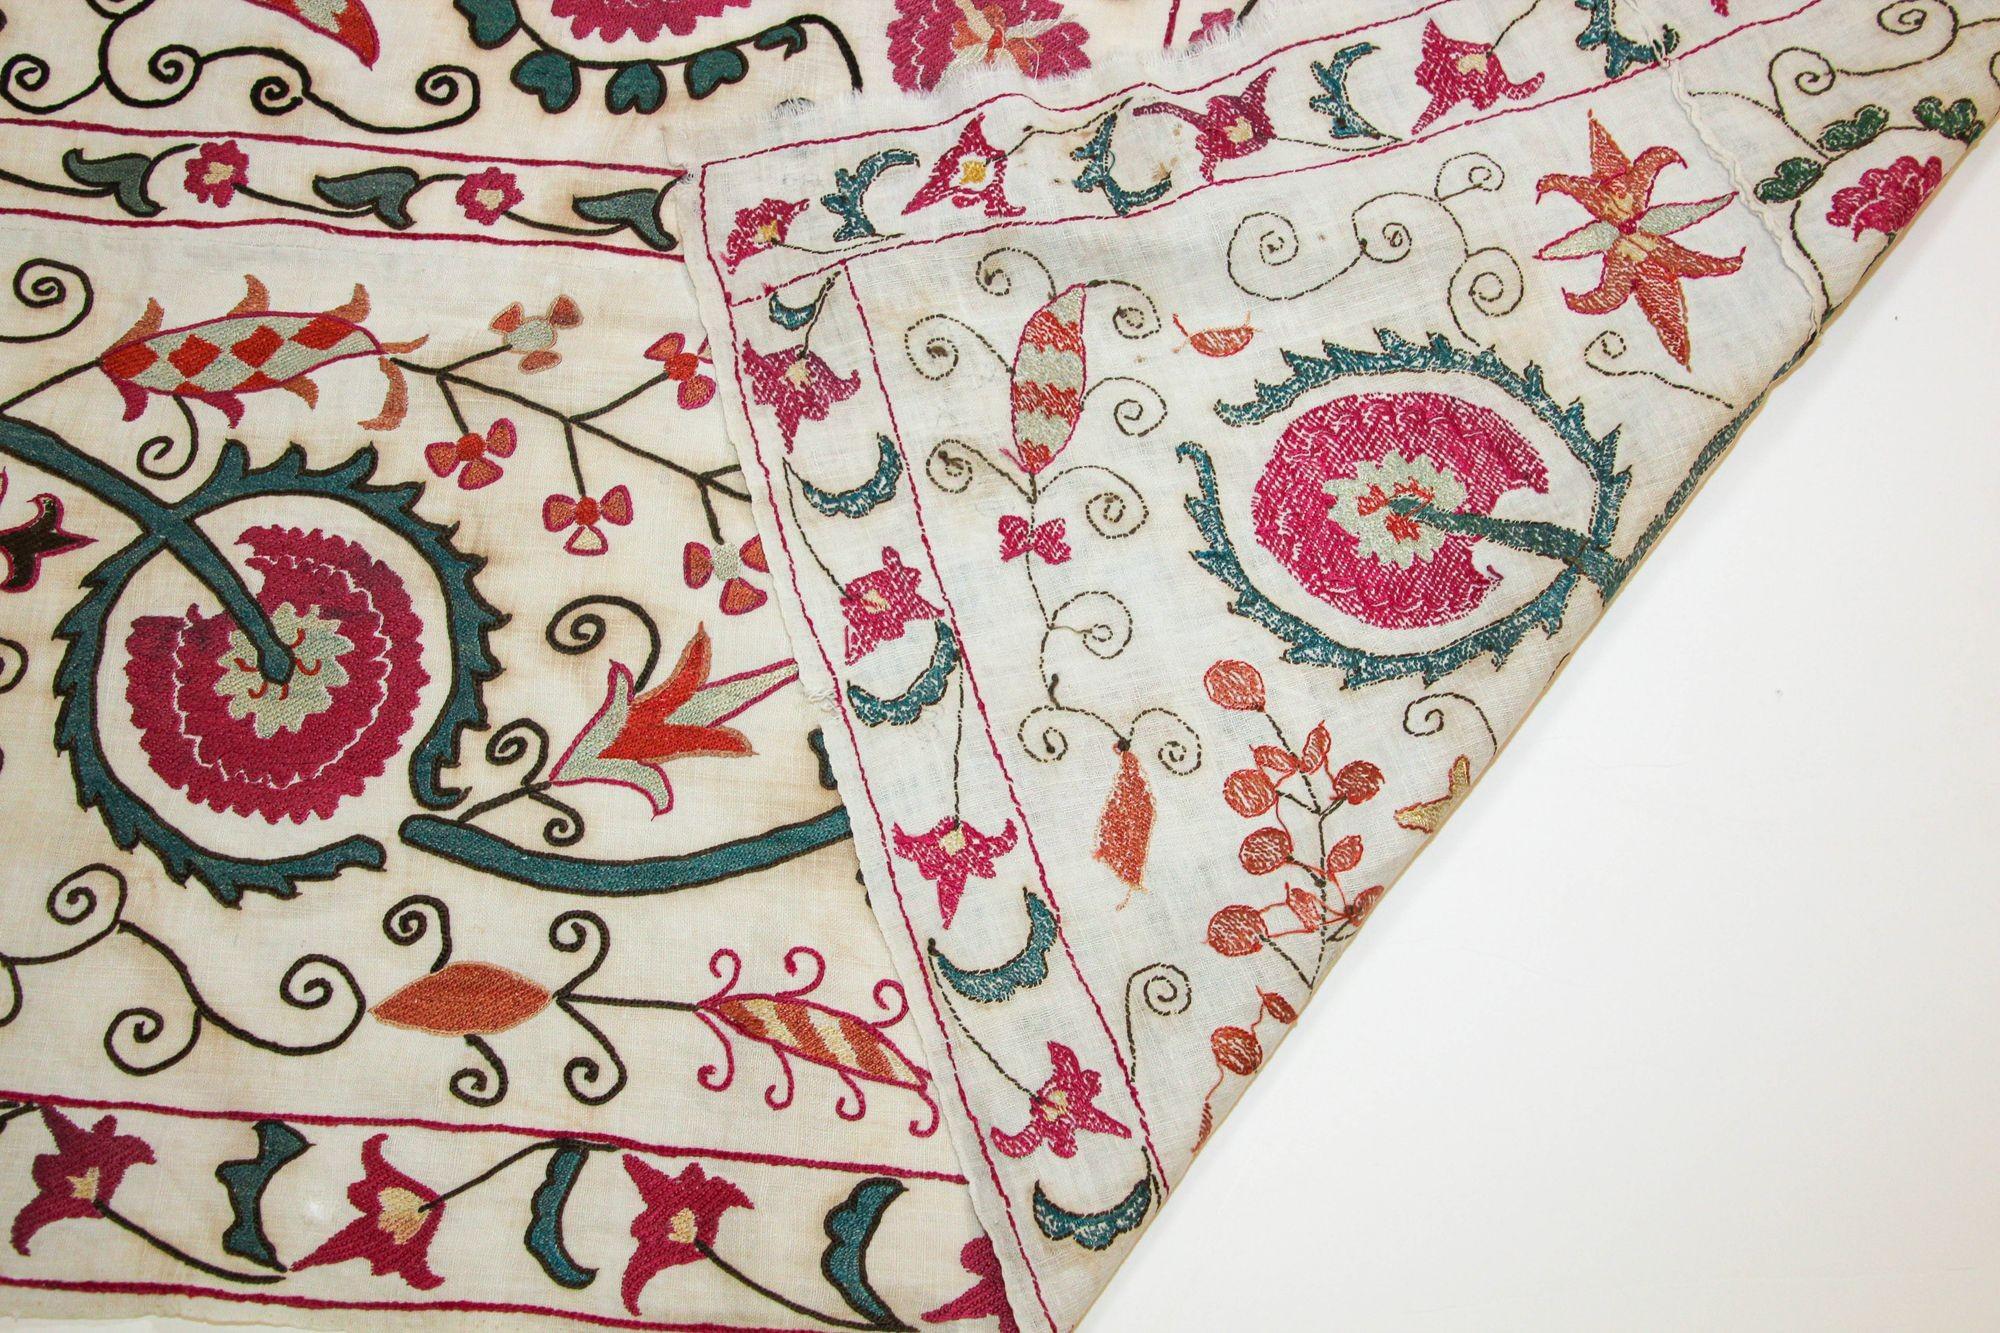 20th Century 19th C. Suzani Bukhara Uzbekistan Antique Embroidered Islamic Art Textile Susani For Sale